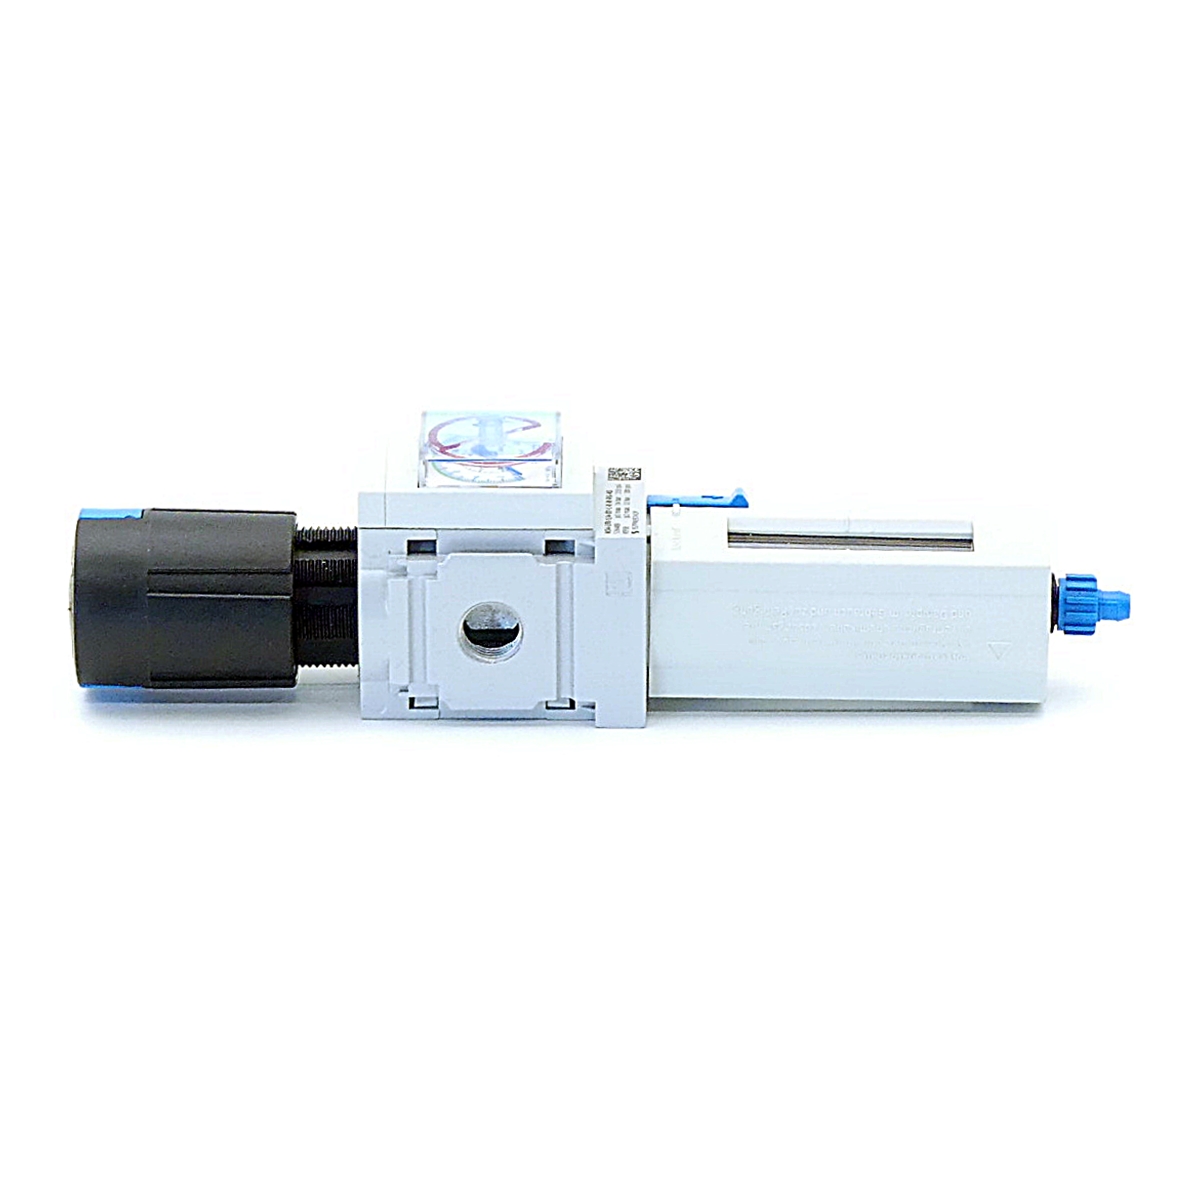 Filter regulator MS4-LFR-1/4-D7-C-R-M-RG-AS 